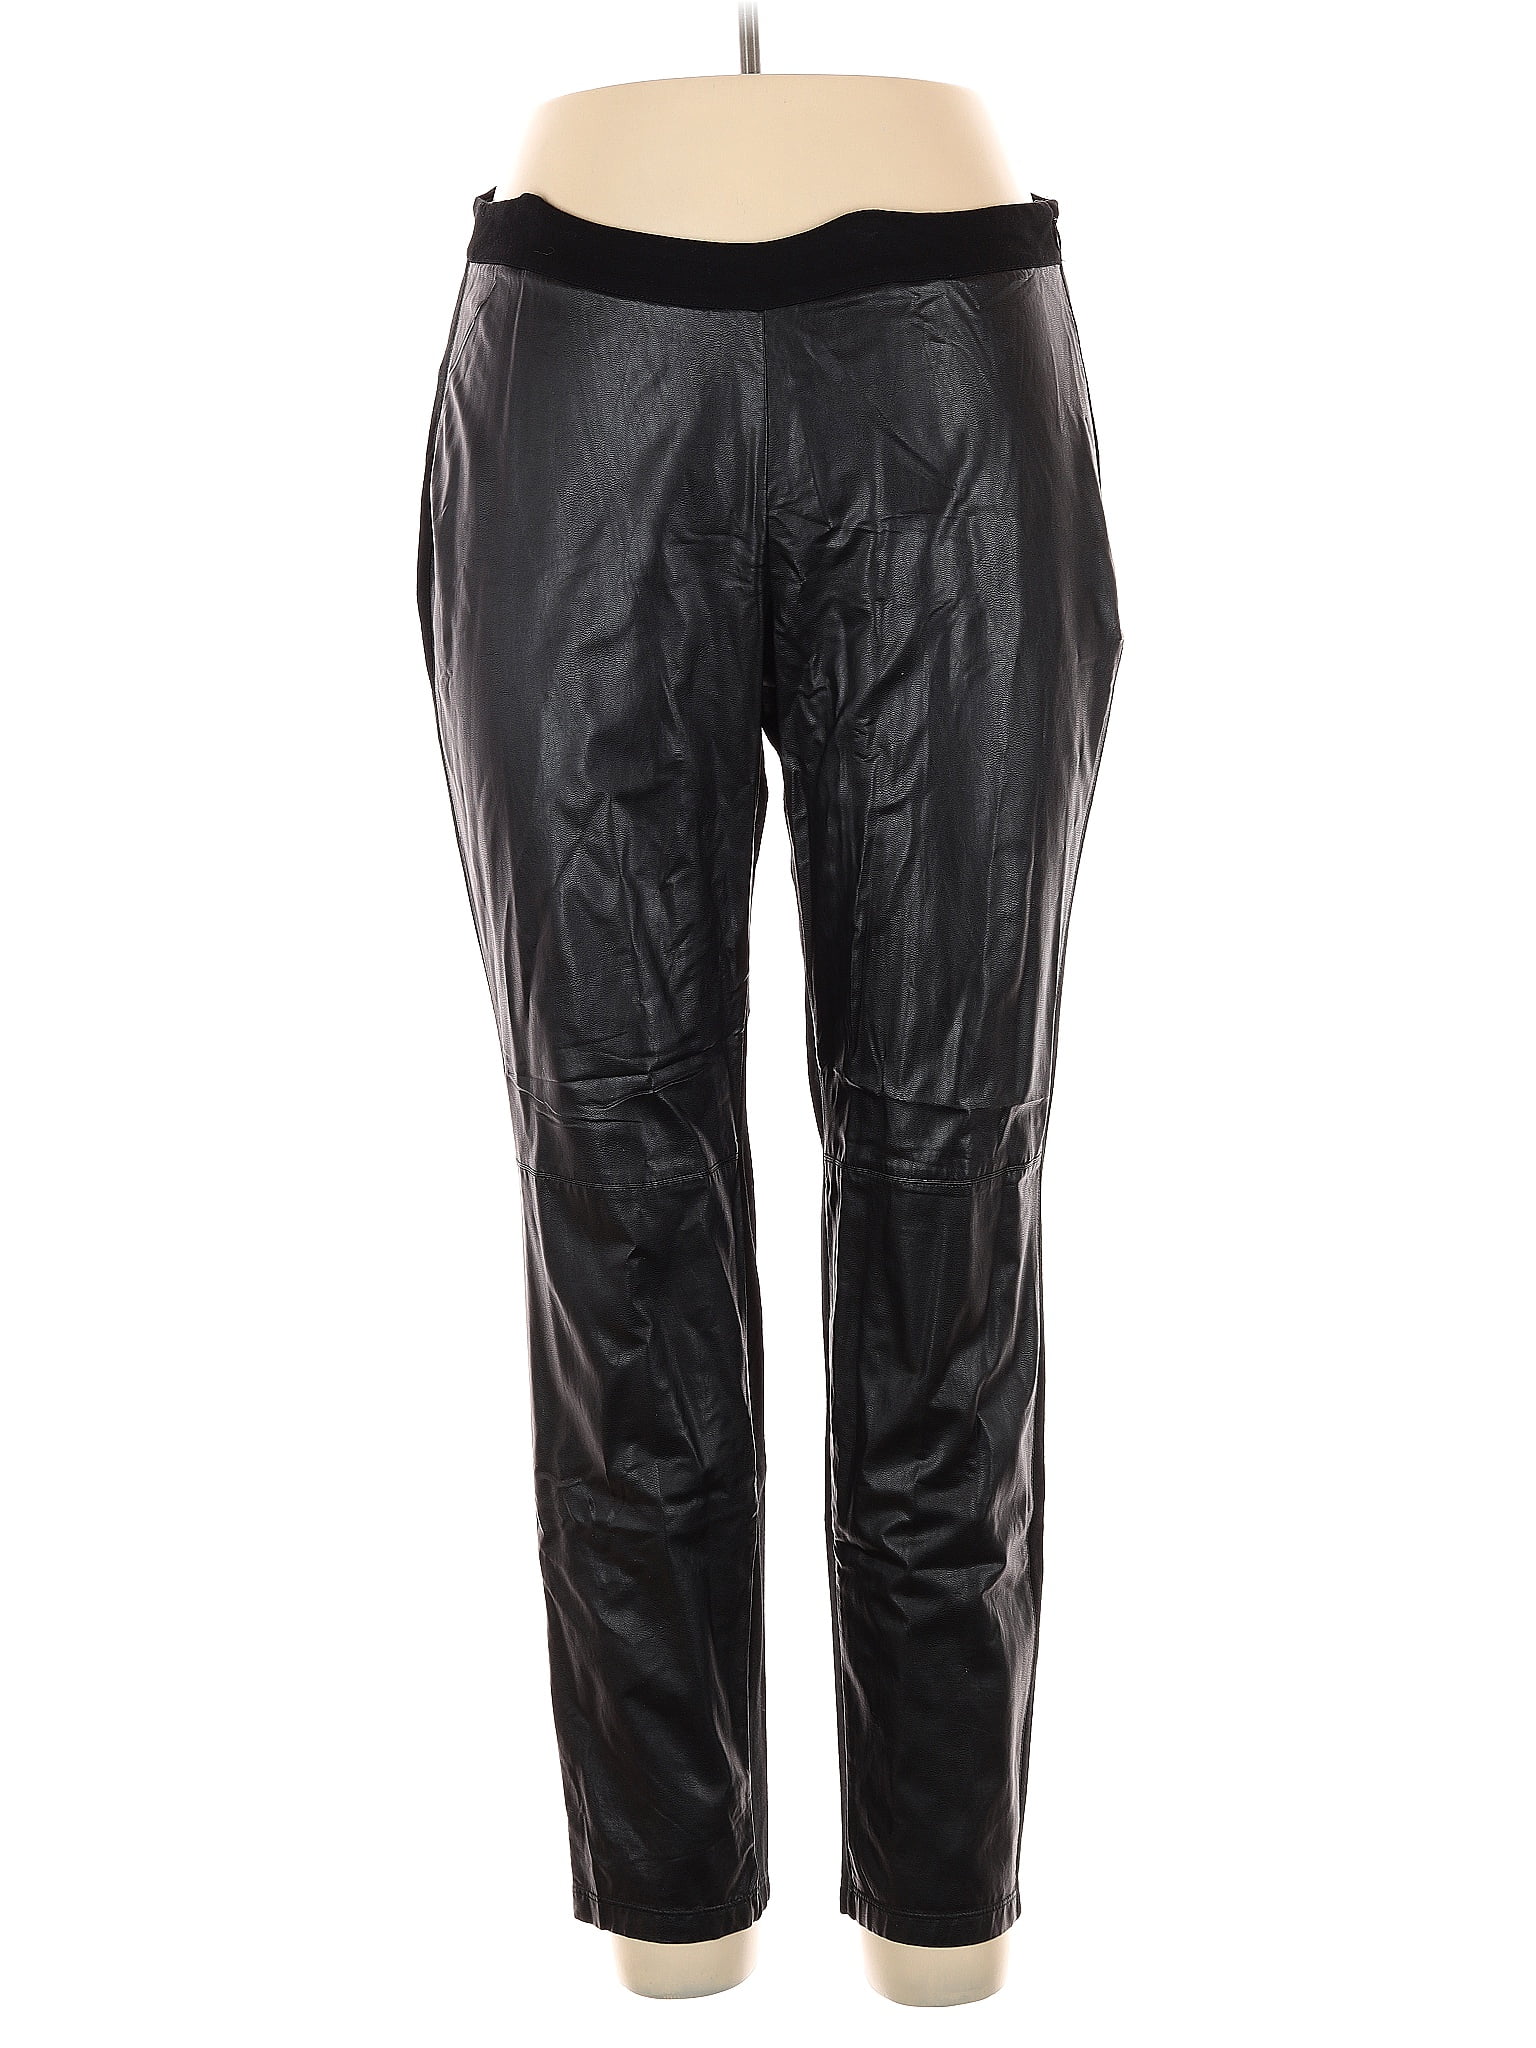 Peter Nygard Women's Black Pants Size10 Faux Leather Trim Stretch